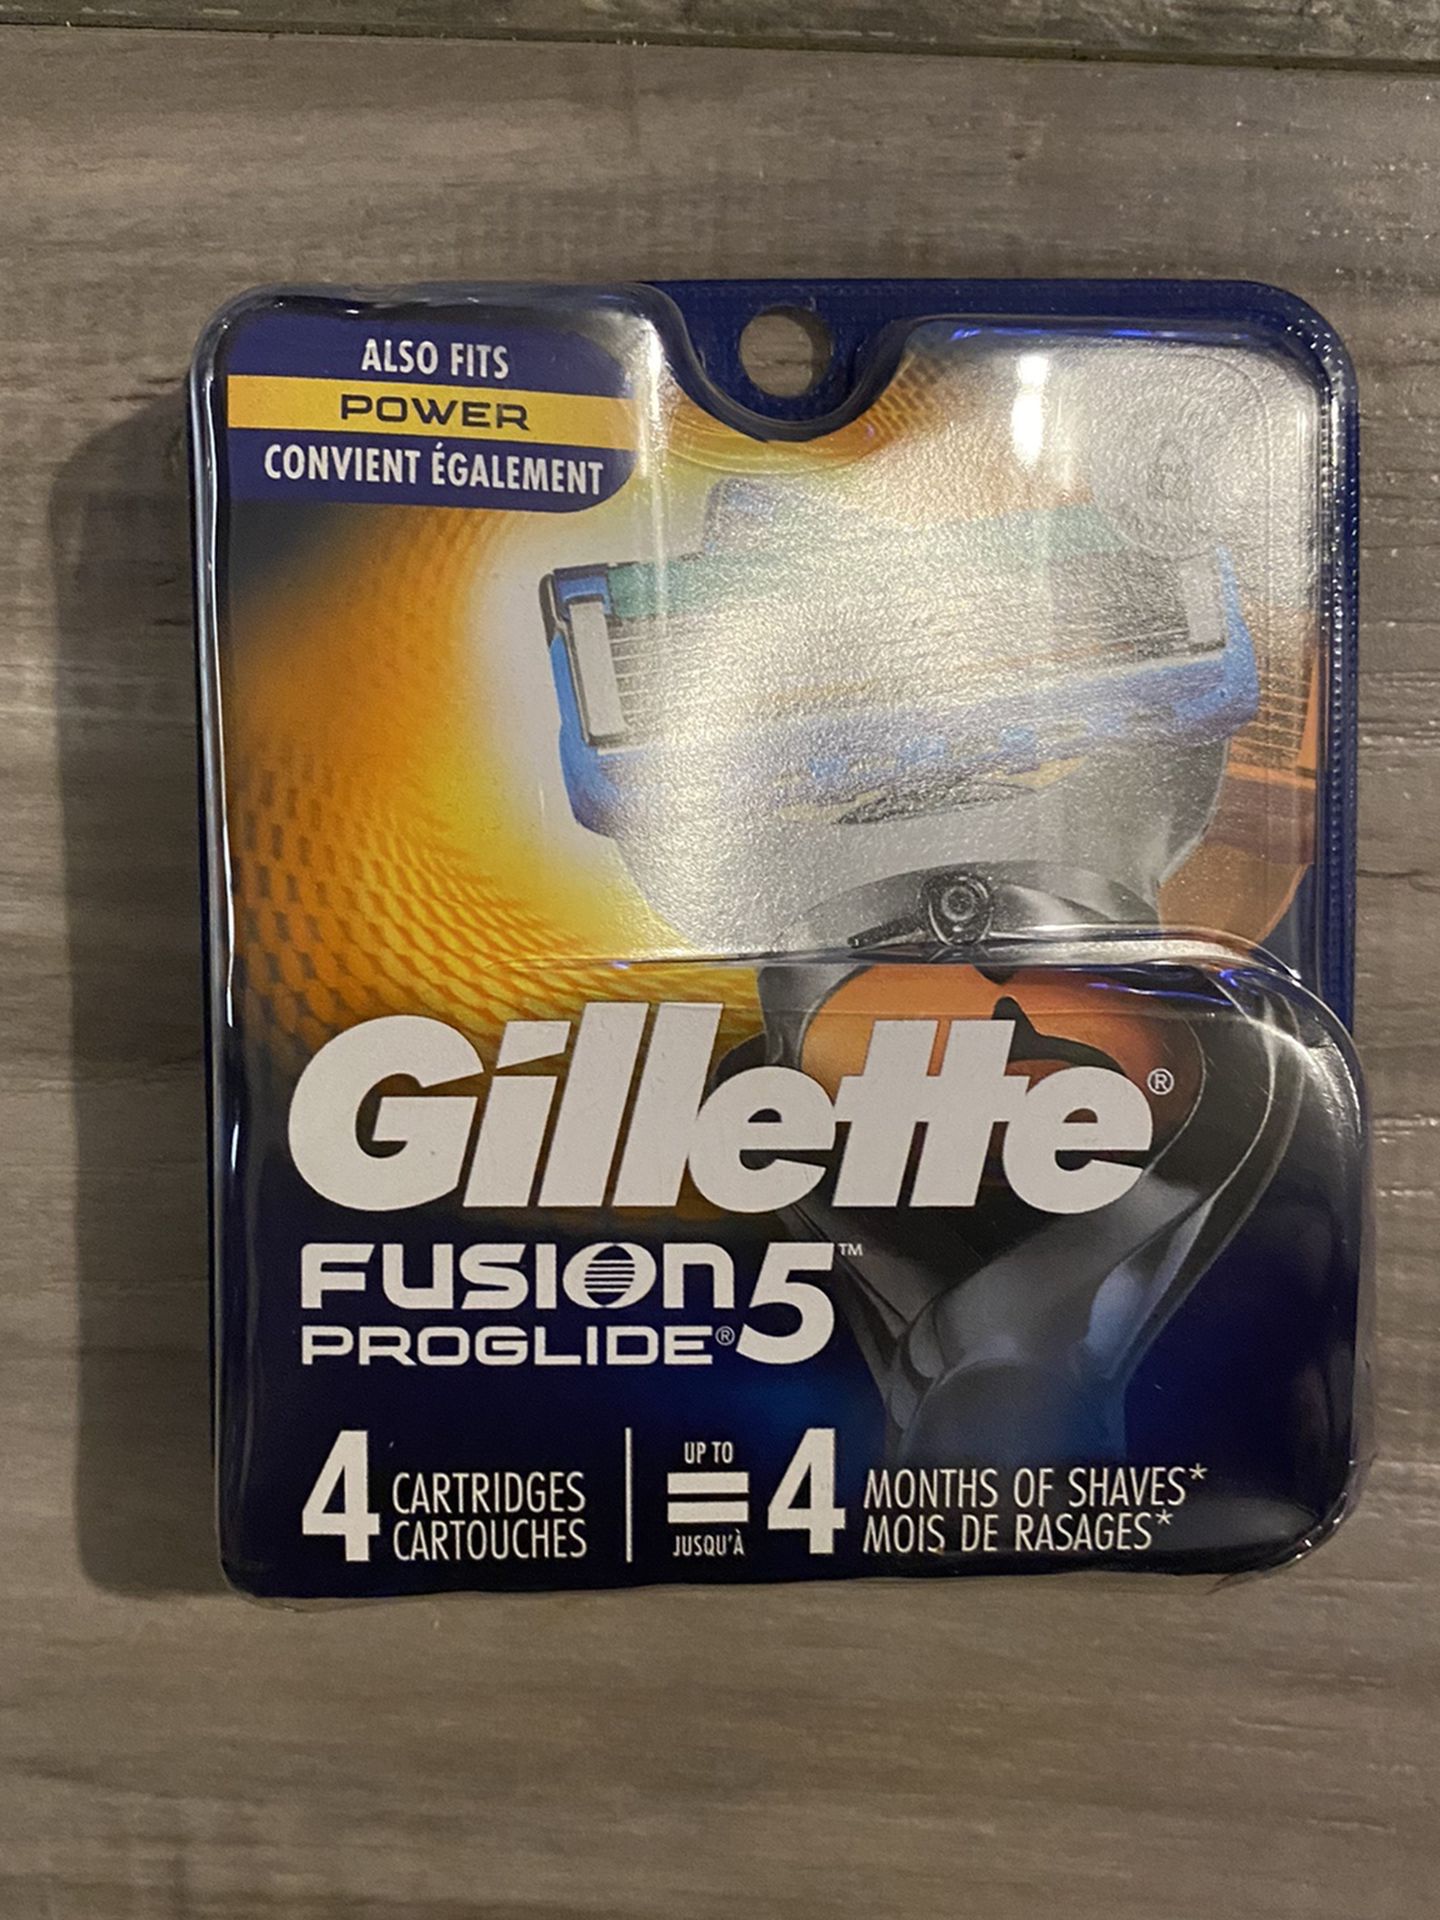 Gillette fusion 5 razor 4 cartridges